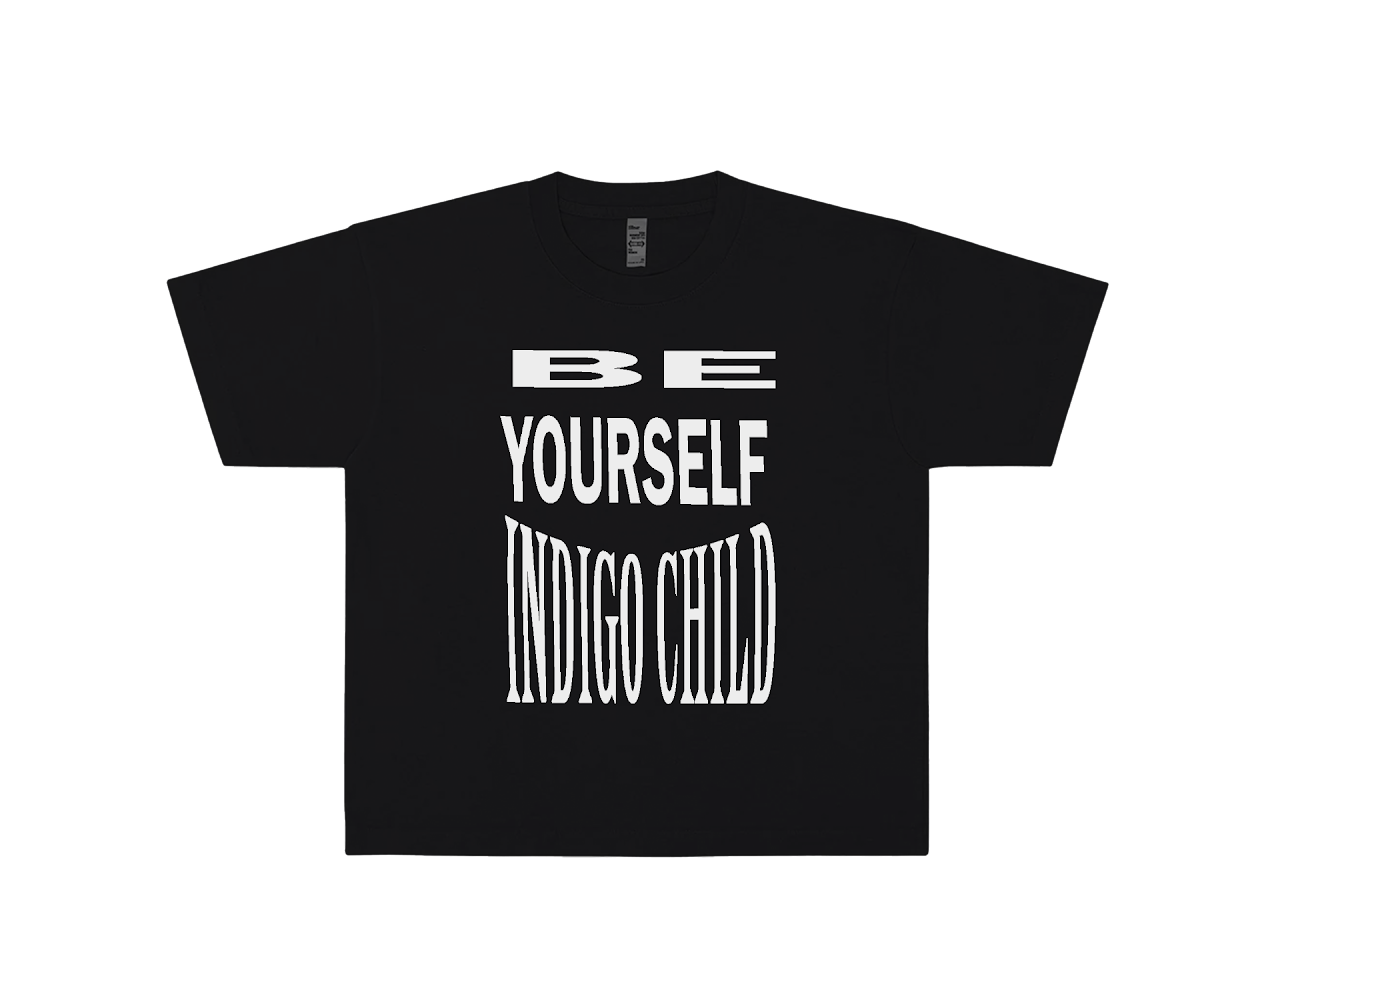 “Be yourself “ tee